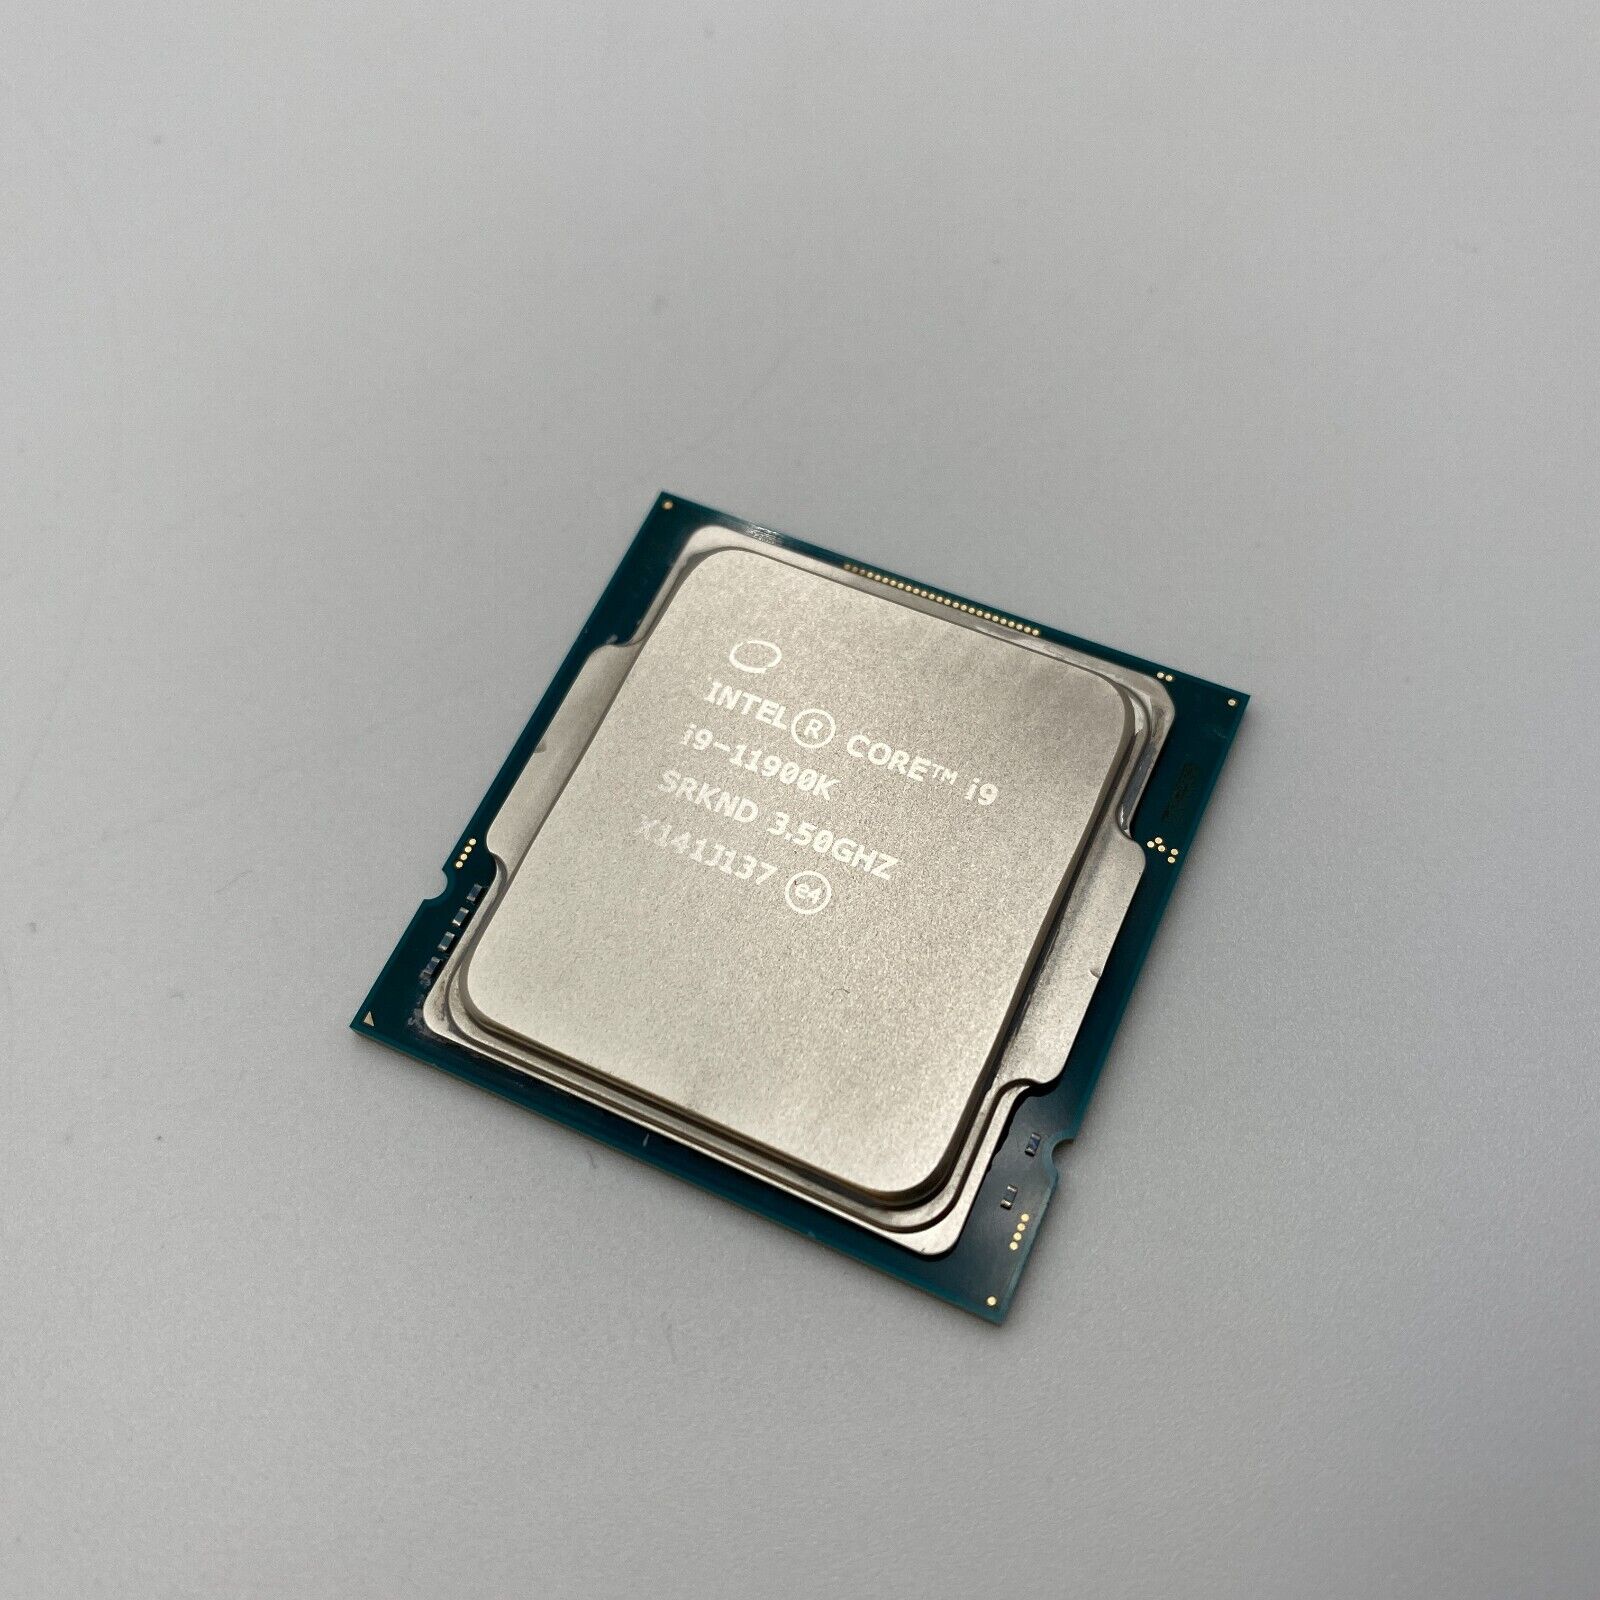 Intel Core i9-11900K Desktop Processor (3.5 GHz, 8 Cores, LGA 1200) Rocket Lake